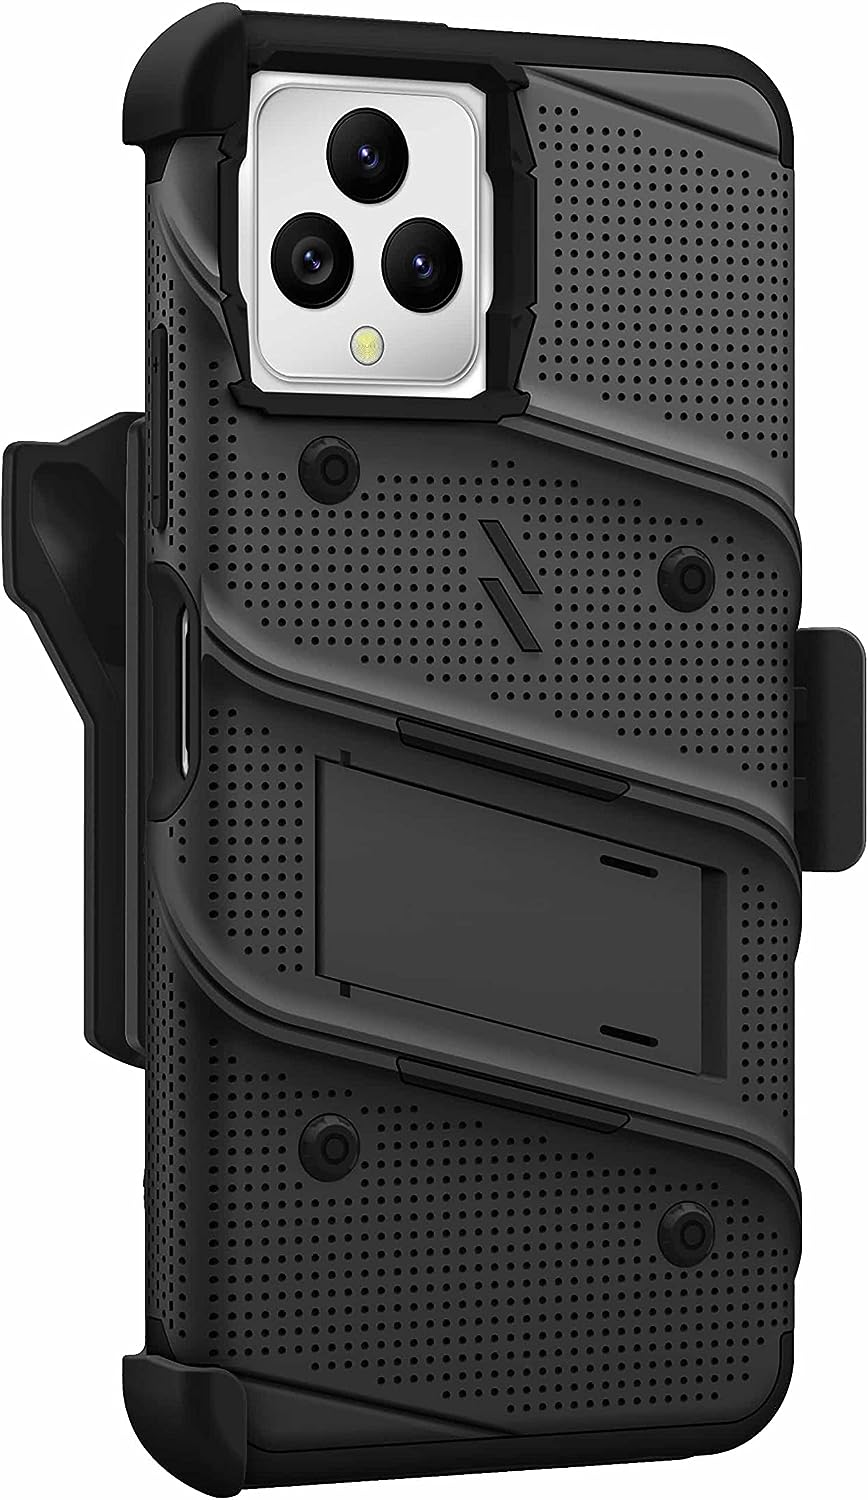 ZIZO Bolt REVVL 6 5G Holster Case with Screen Protector, Built-in Kickstand & Lanyard - Black